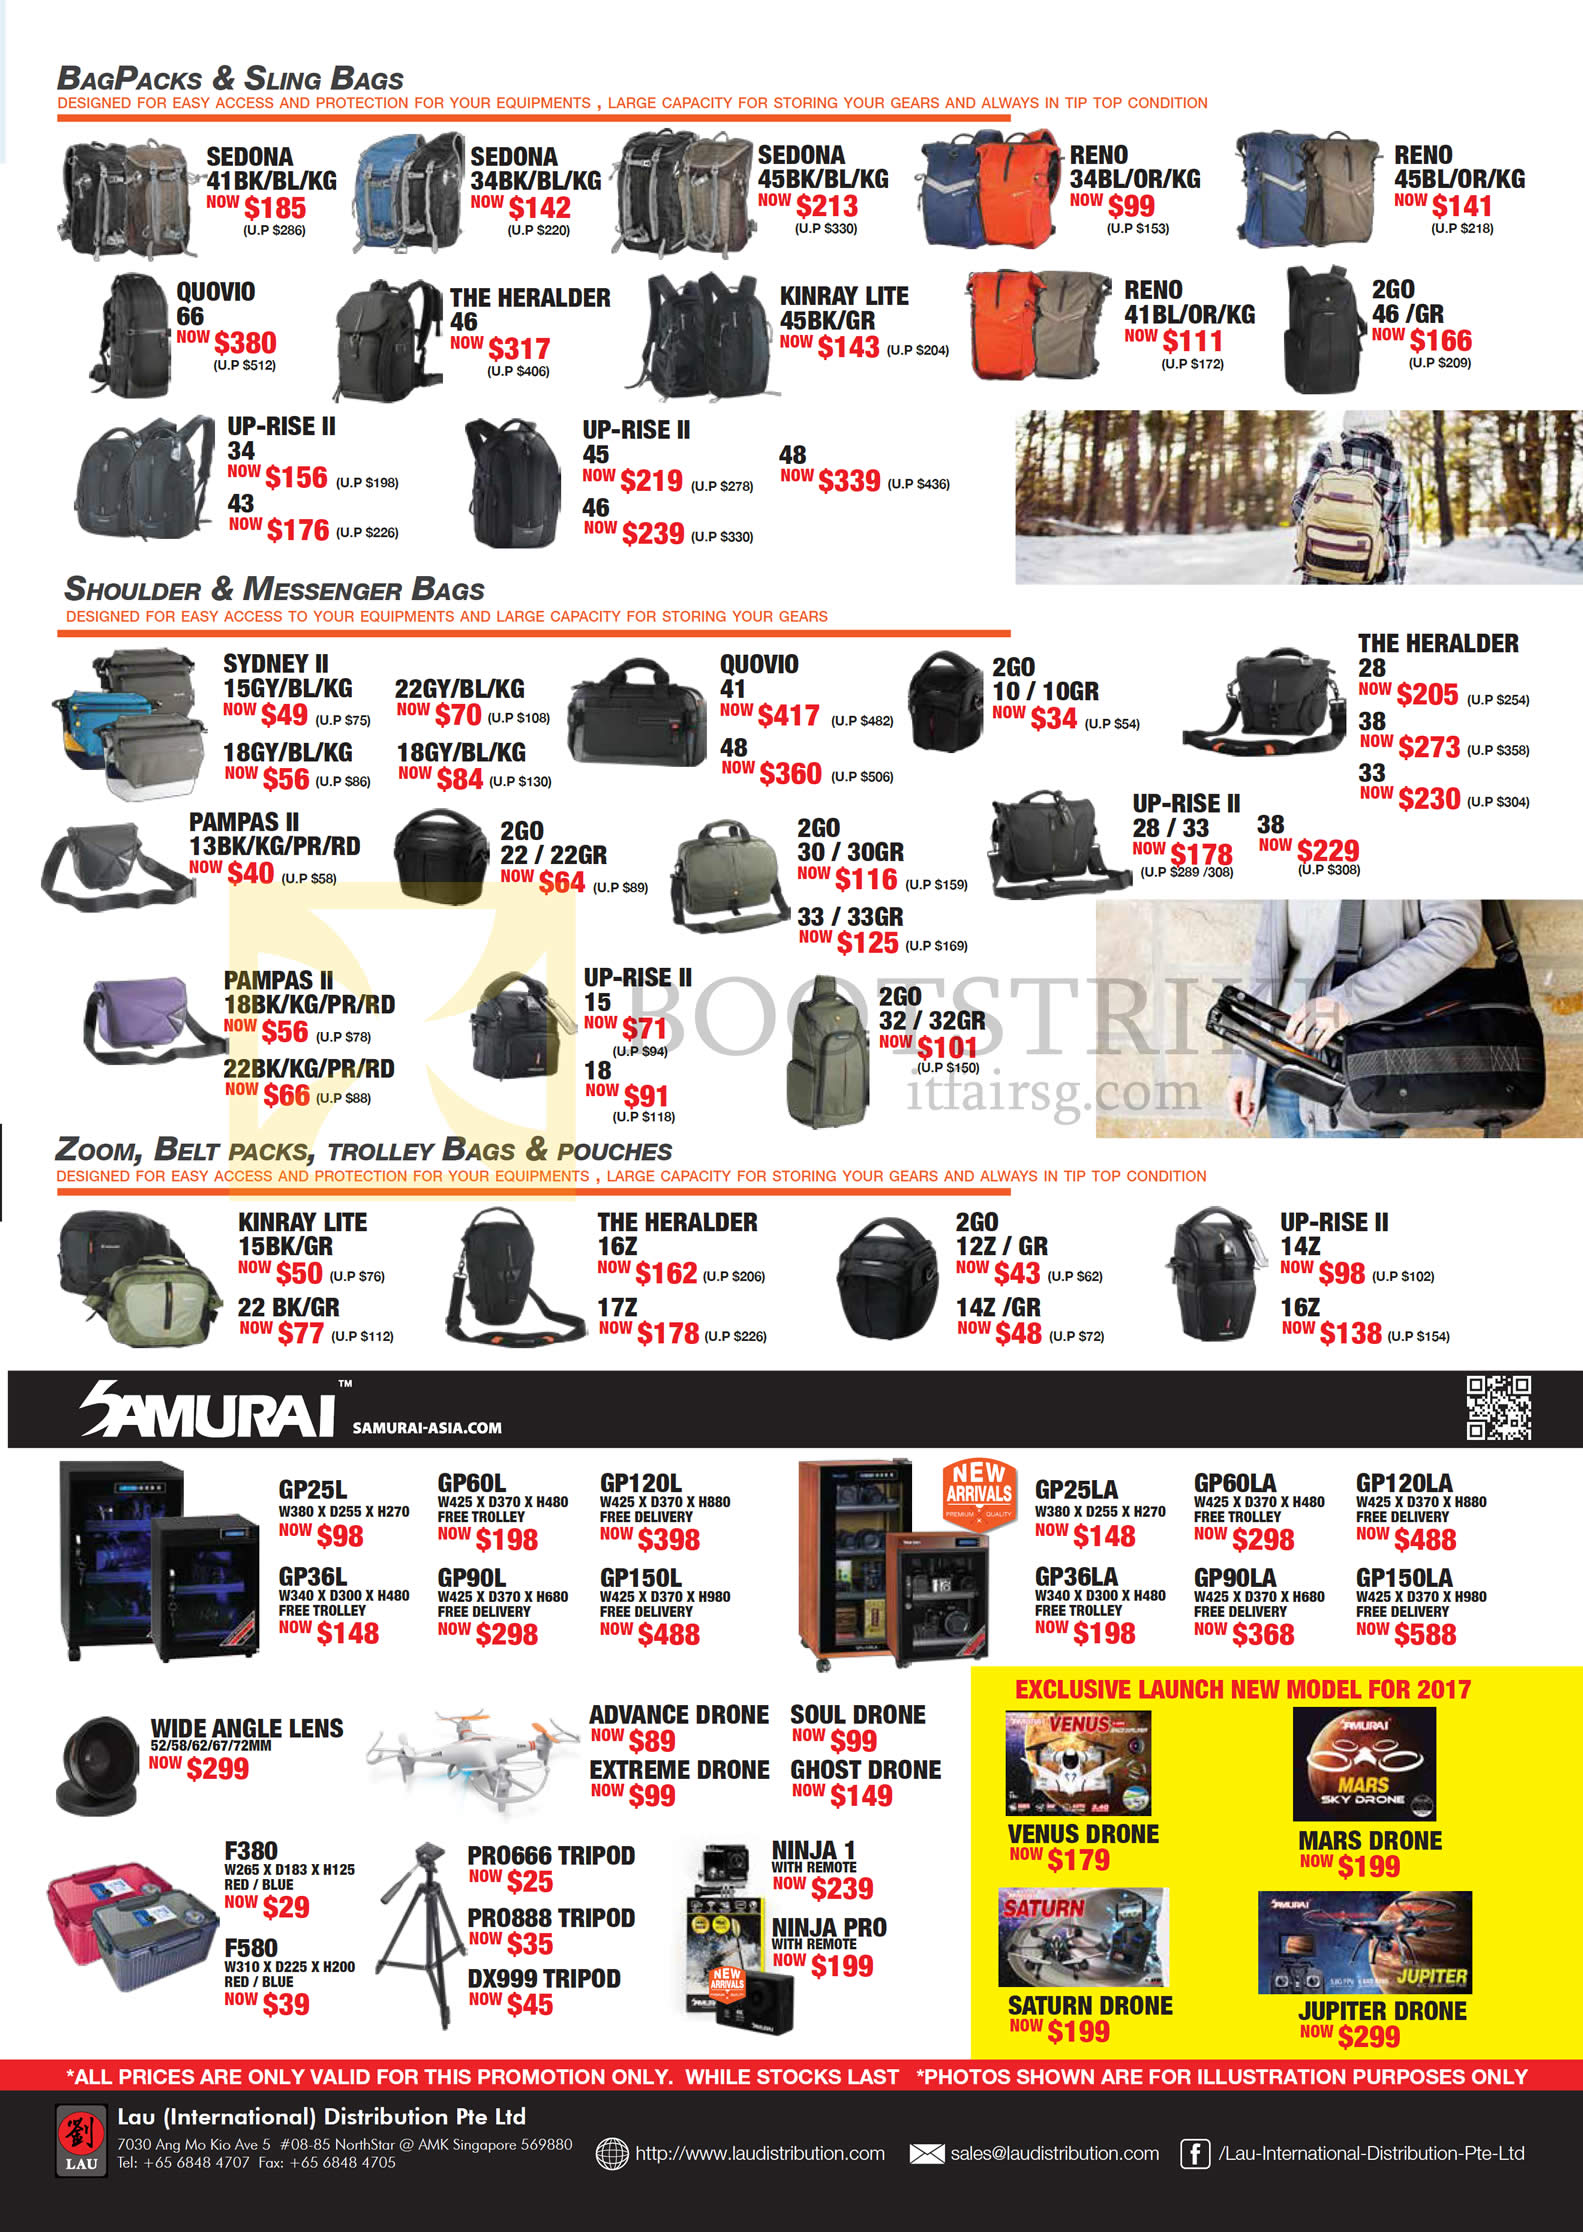 COMEX 2016 price list image brochure of Lau Intl Bagpacks, Sling Bags, Shoulder Messenger Bags, Zoom, Belt Packs, Trolley Bags, Pouches, Samurai